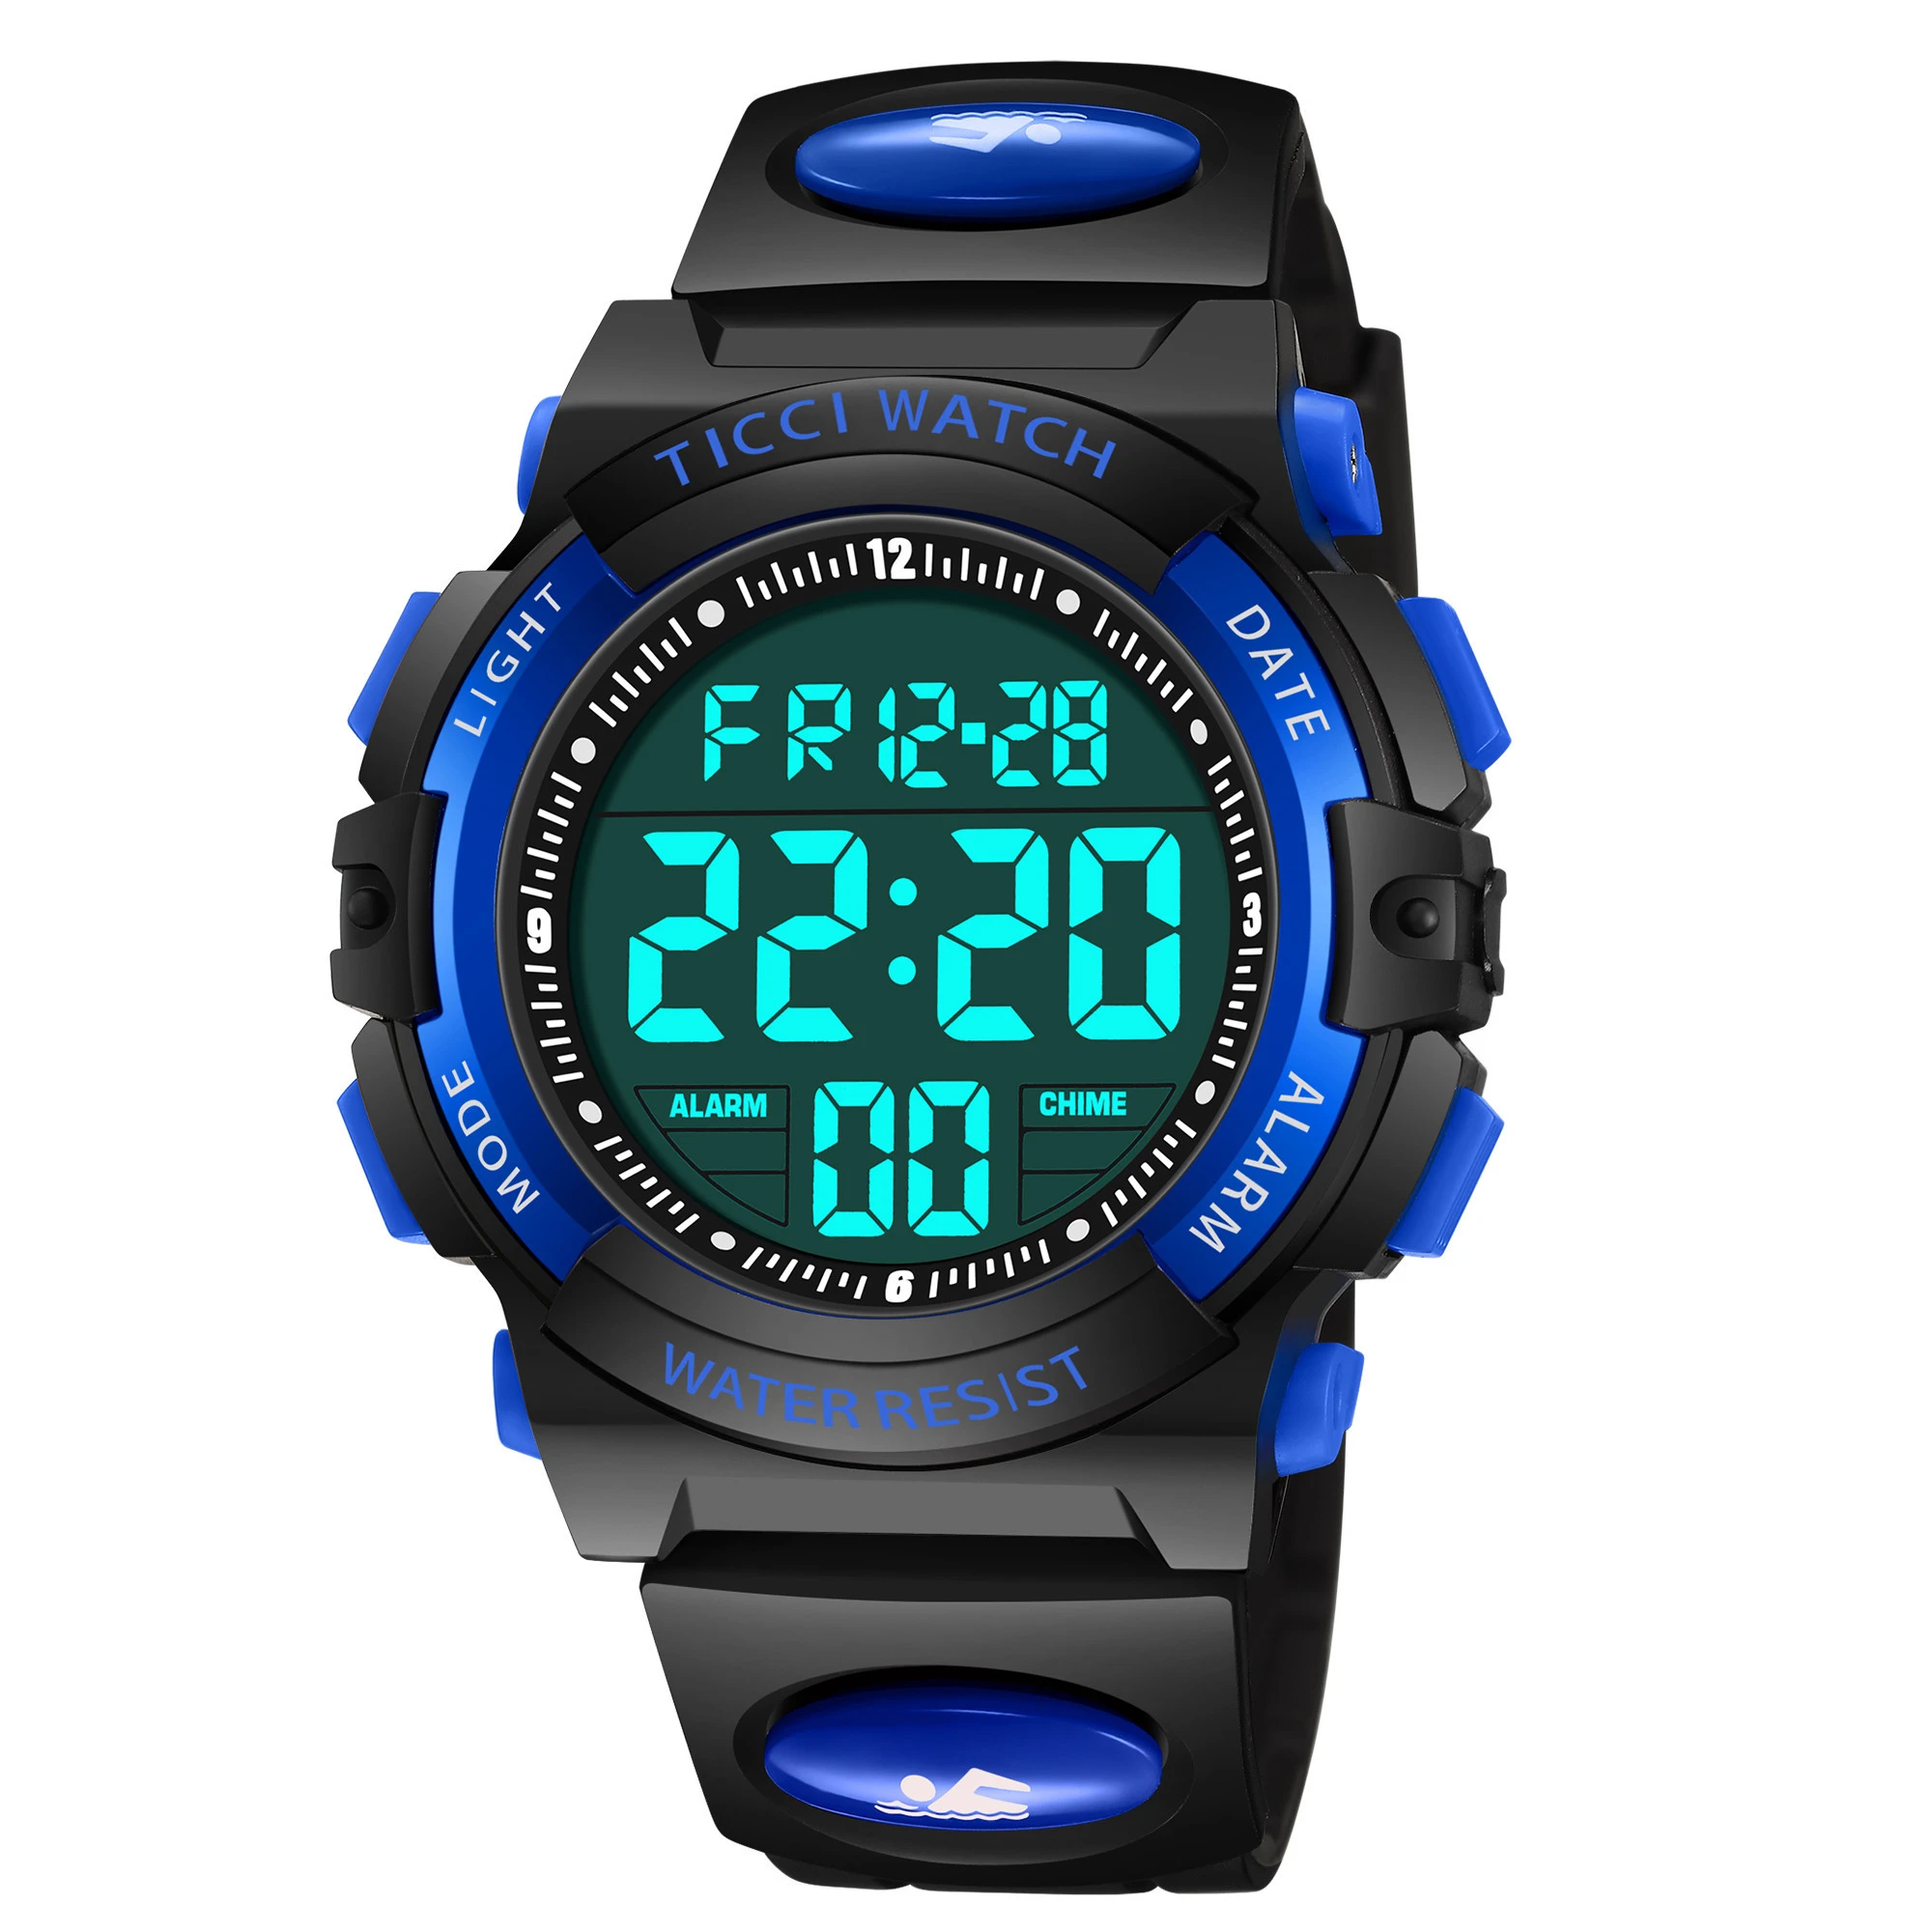 t8919 kids electronic digital watch sports waterproof watches with alarm chime stopwatch wrist watch for children girls boys1 0868200001591000563.jpg